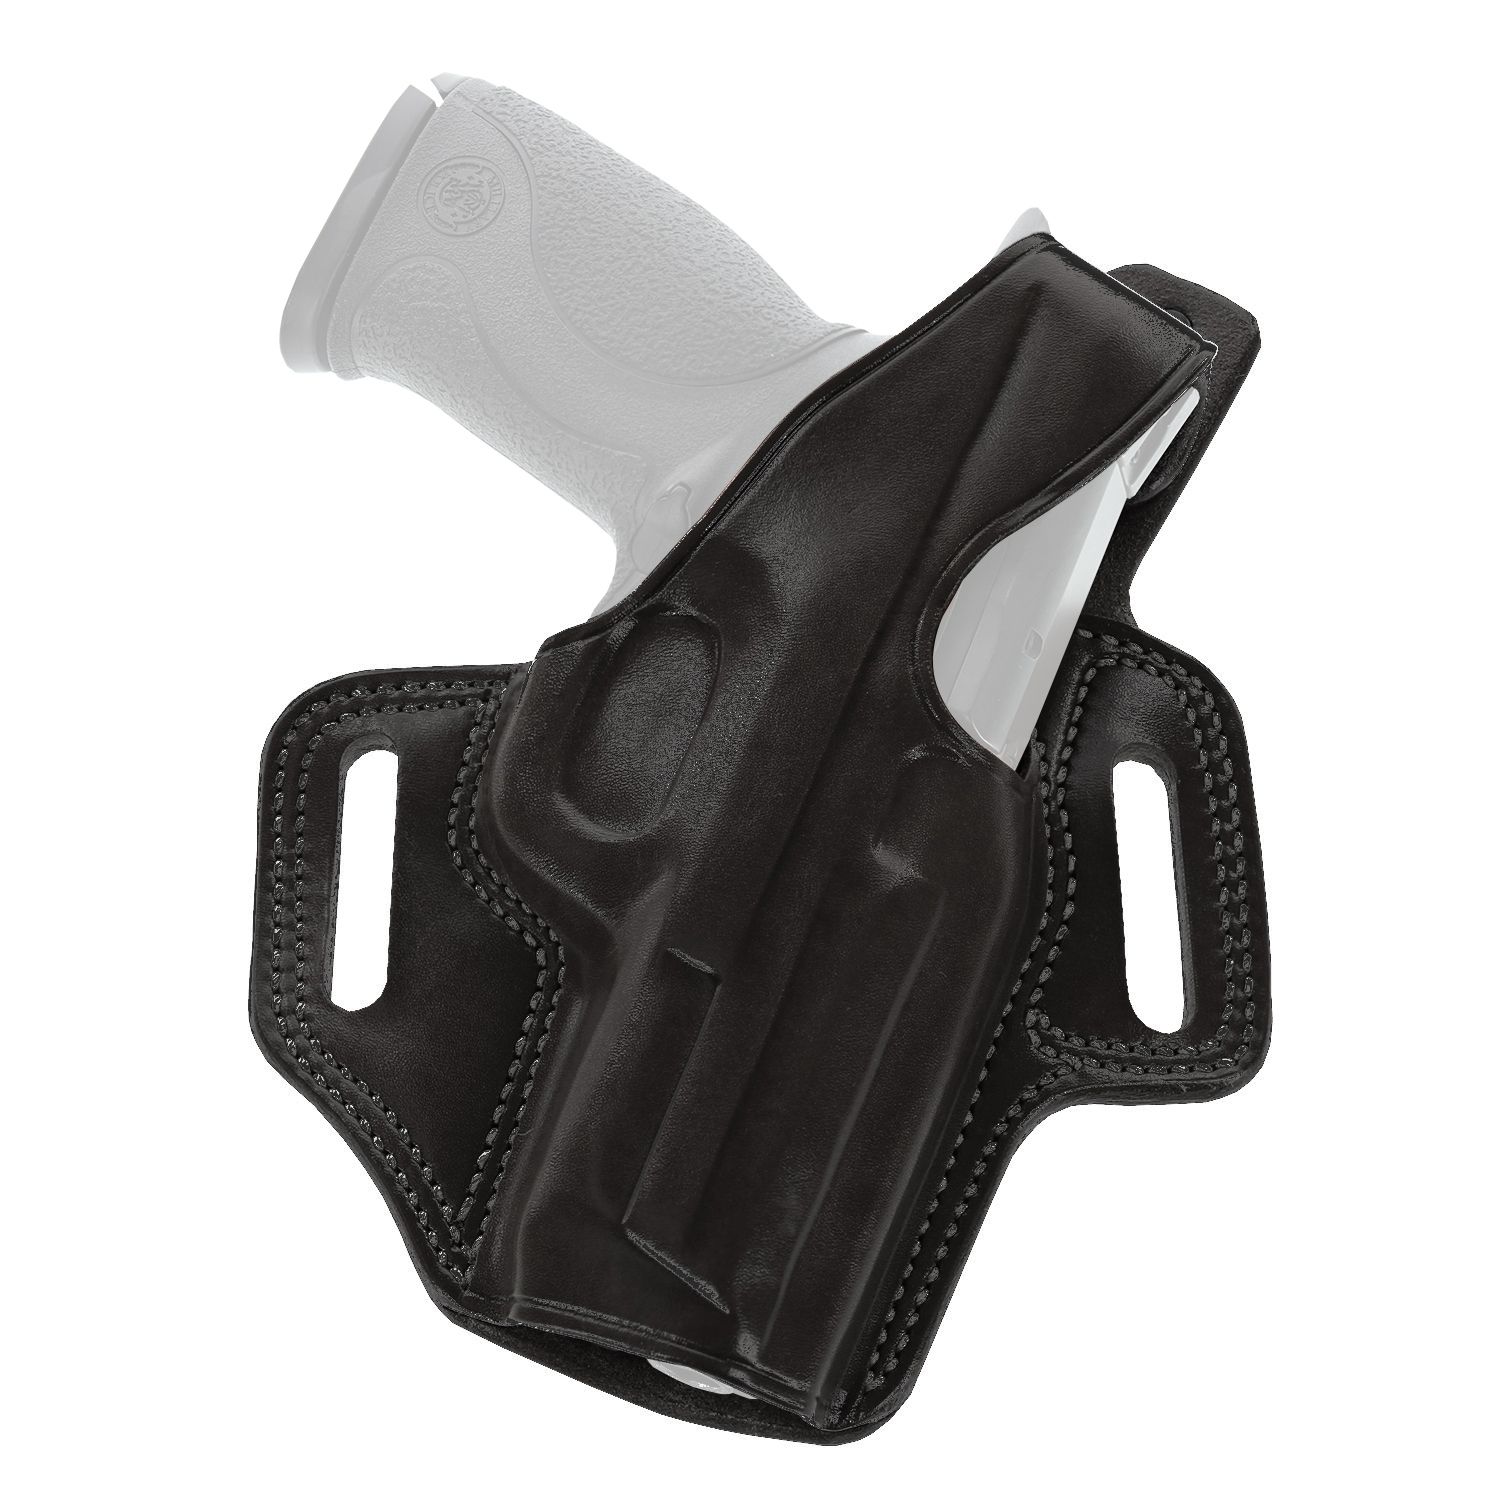 Galco Fletch Concealment Paddle Holster Right Hand Black - H&K Usp : FL428B